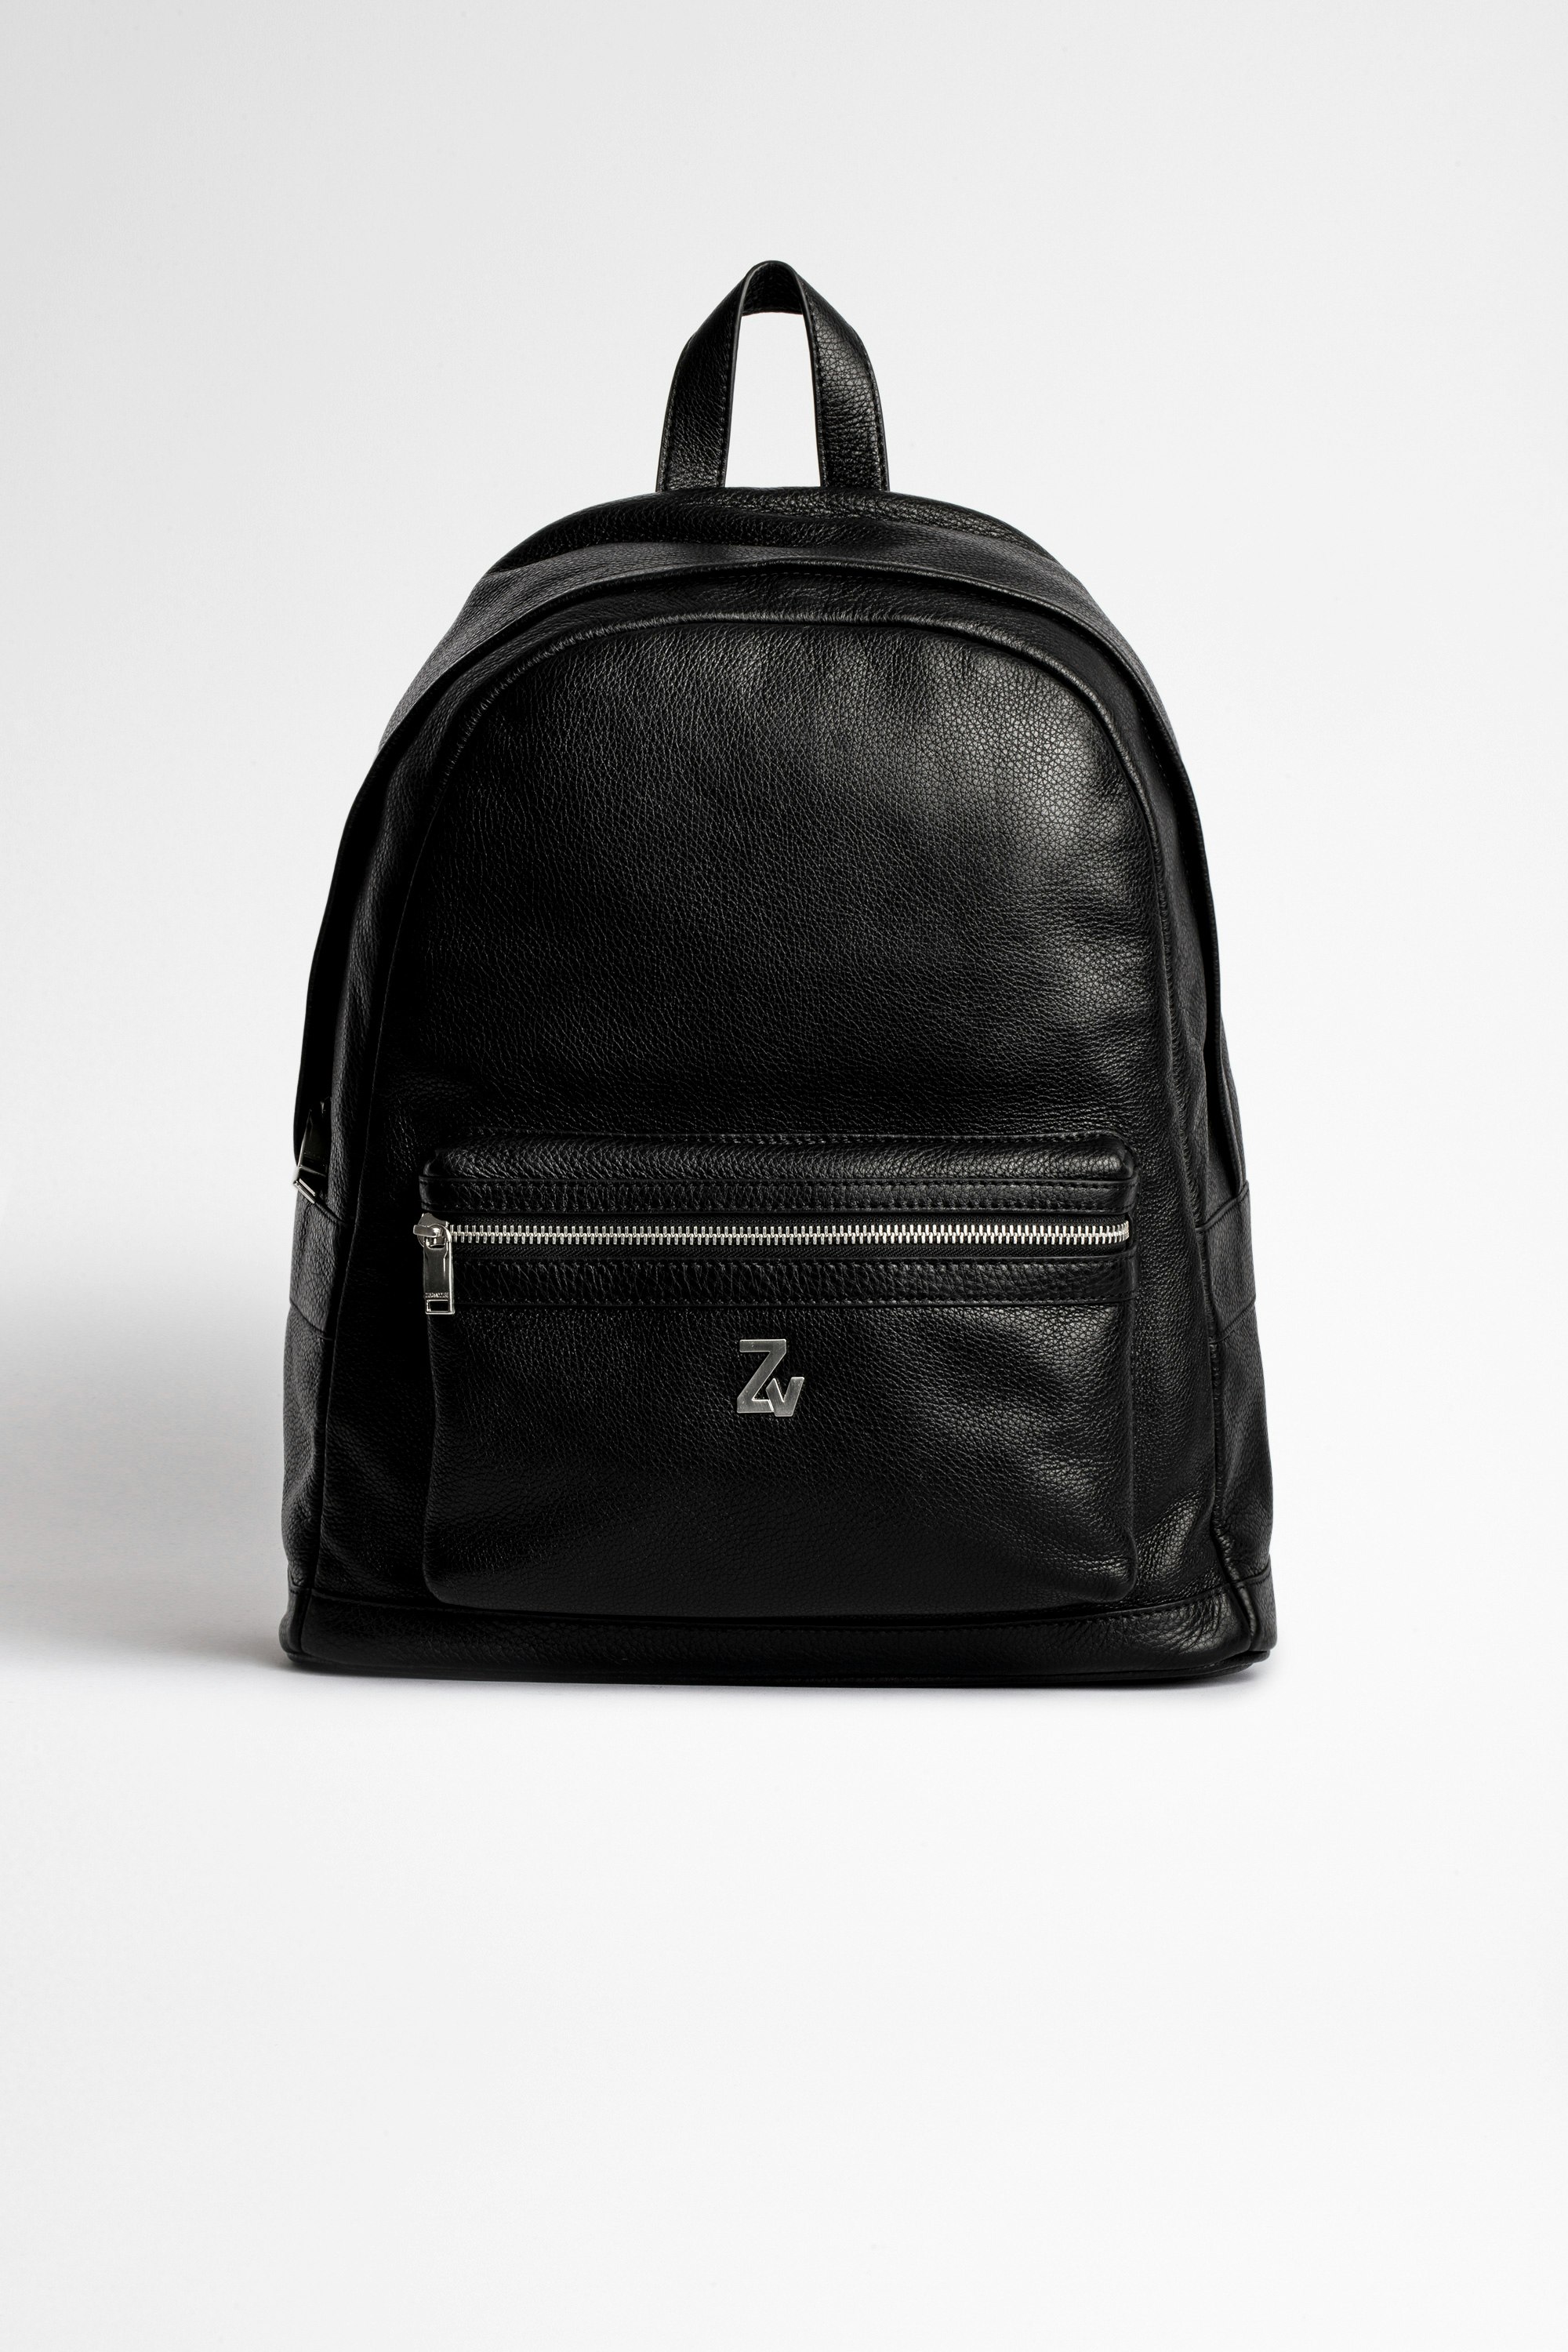 ZV Initiale Jordan Bag Men's black grained leather bag